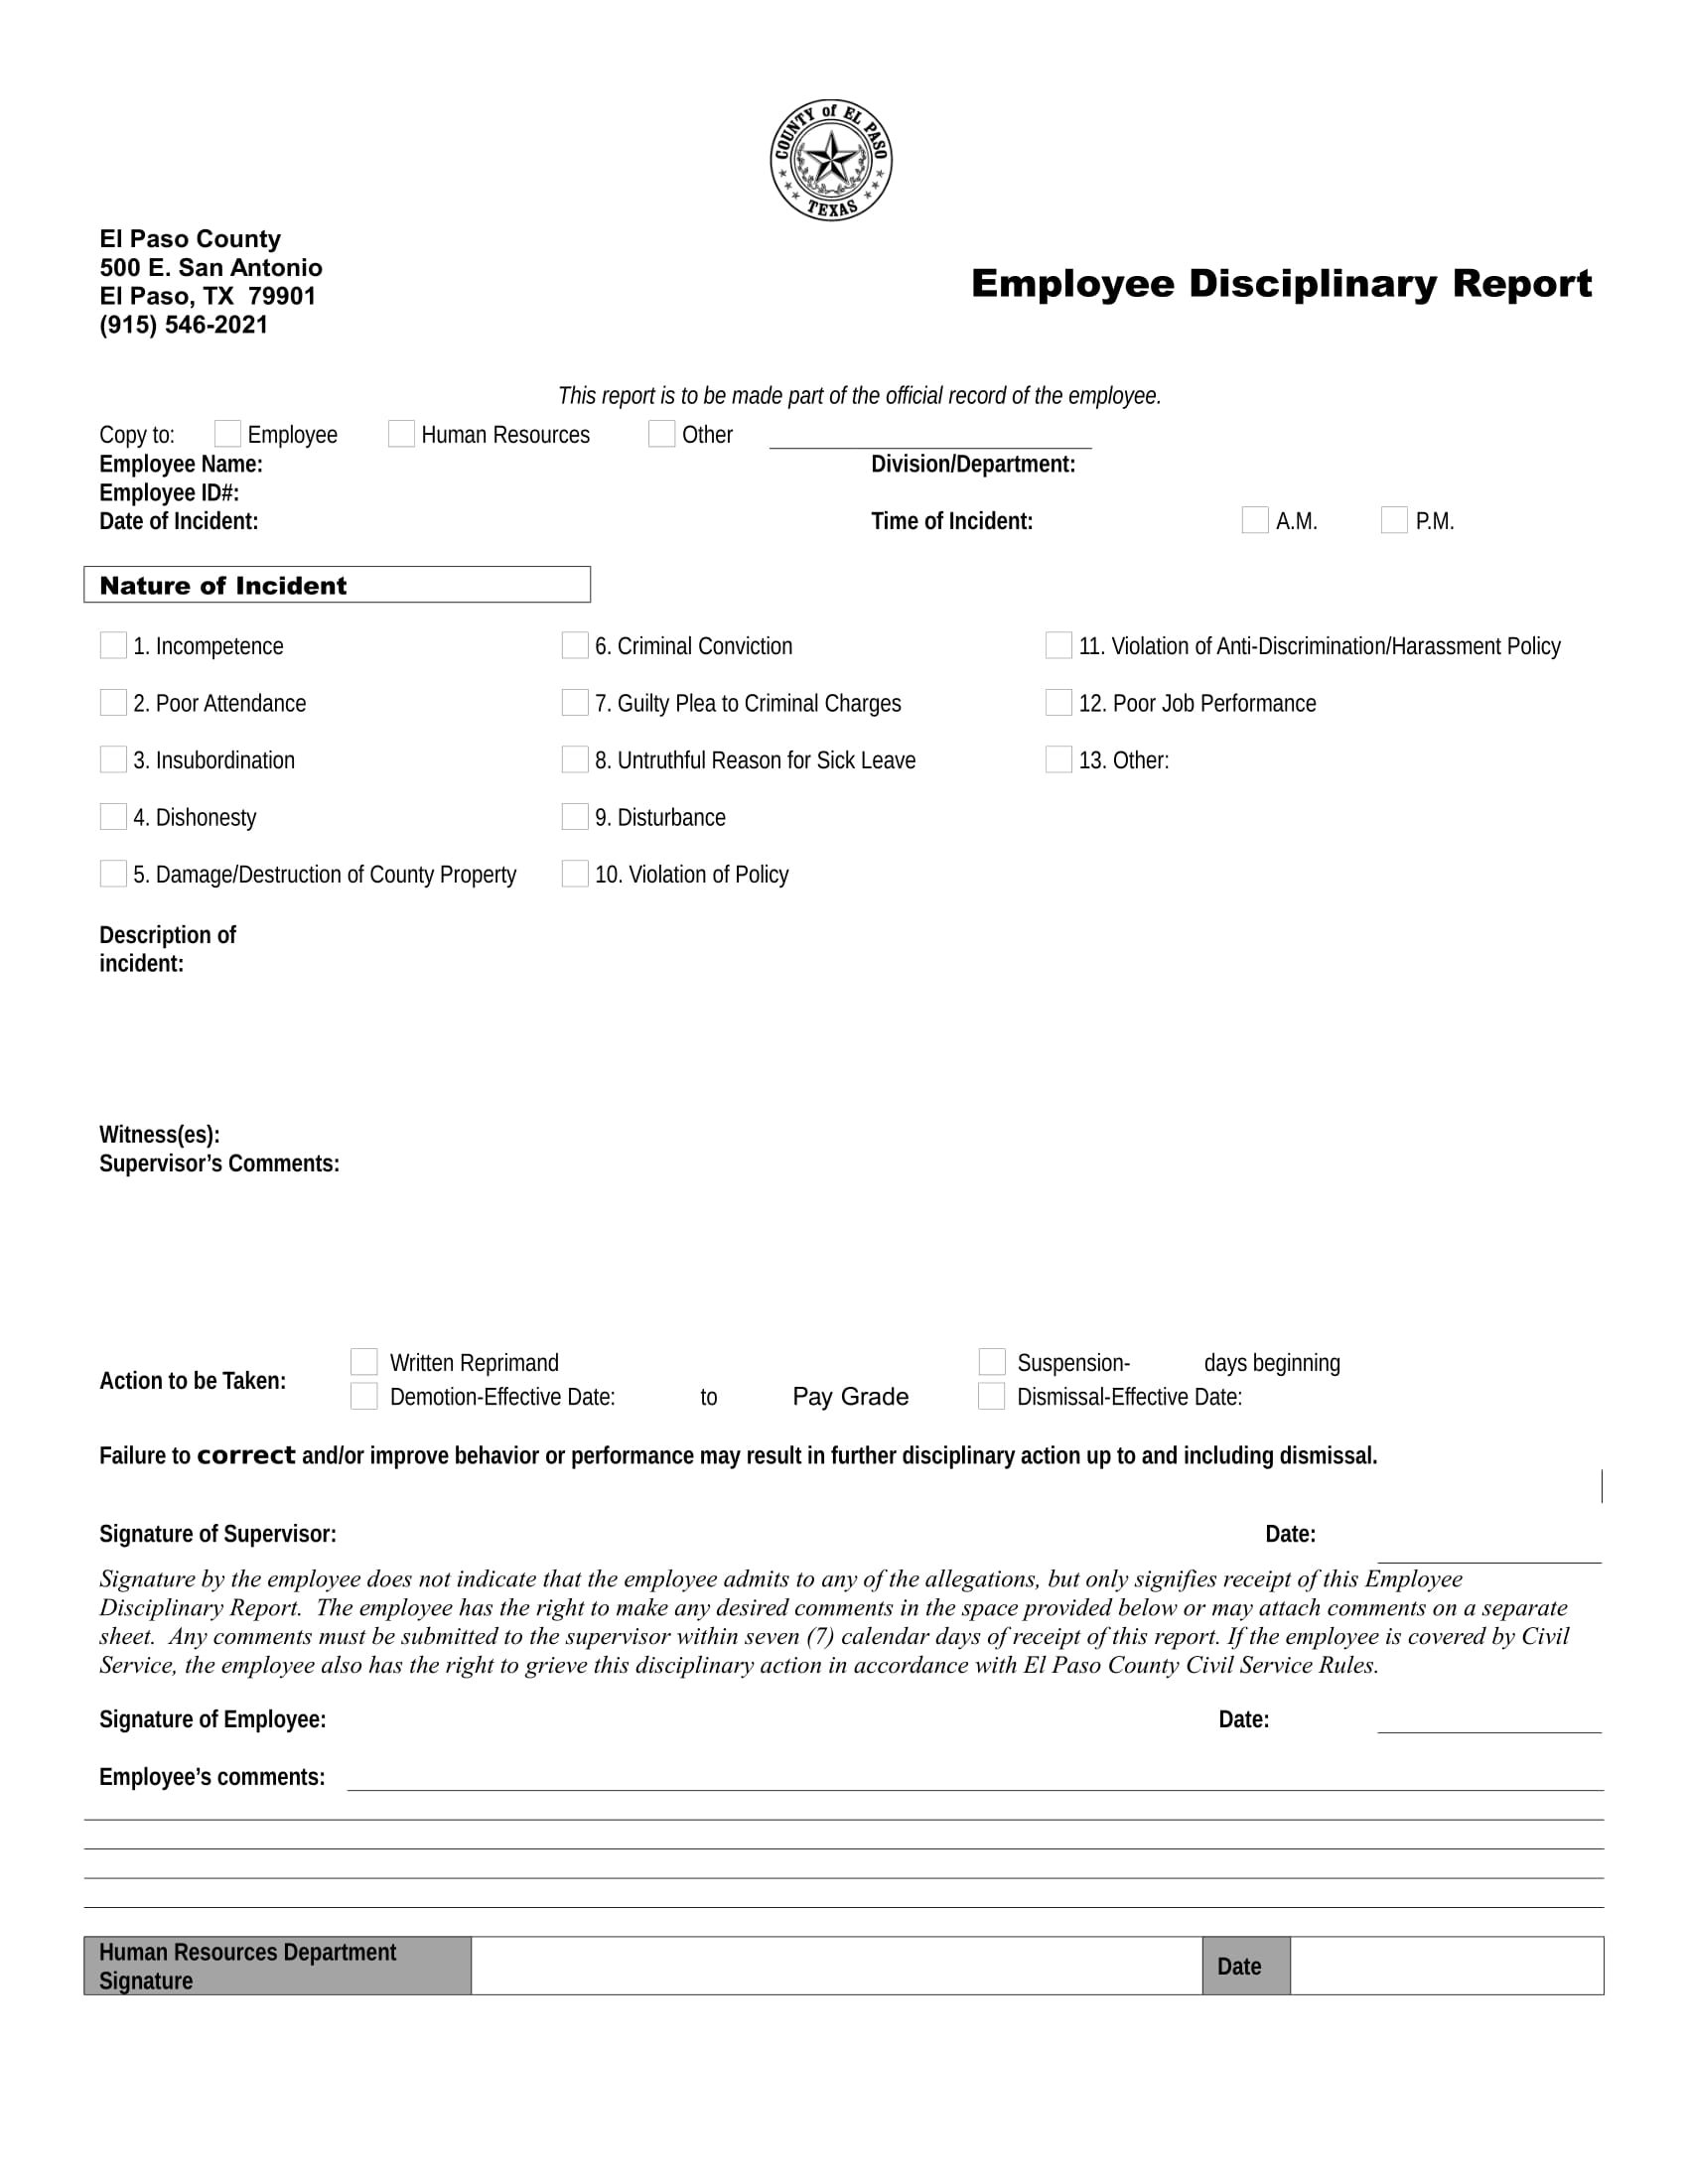 employee disciplinary report in doc 1